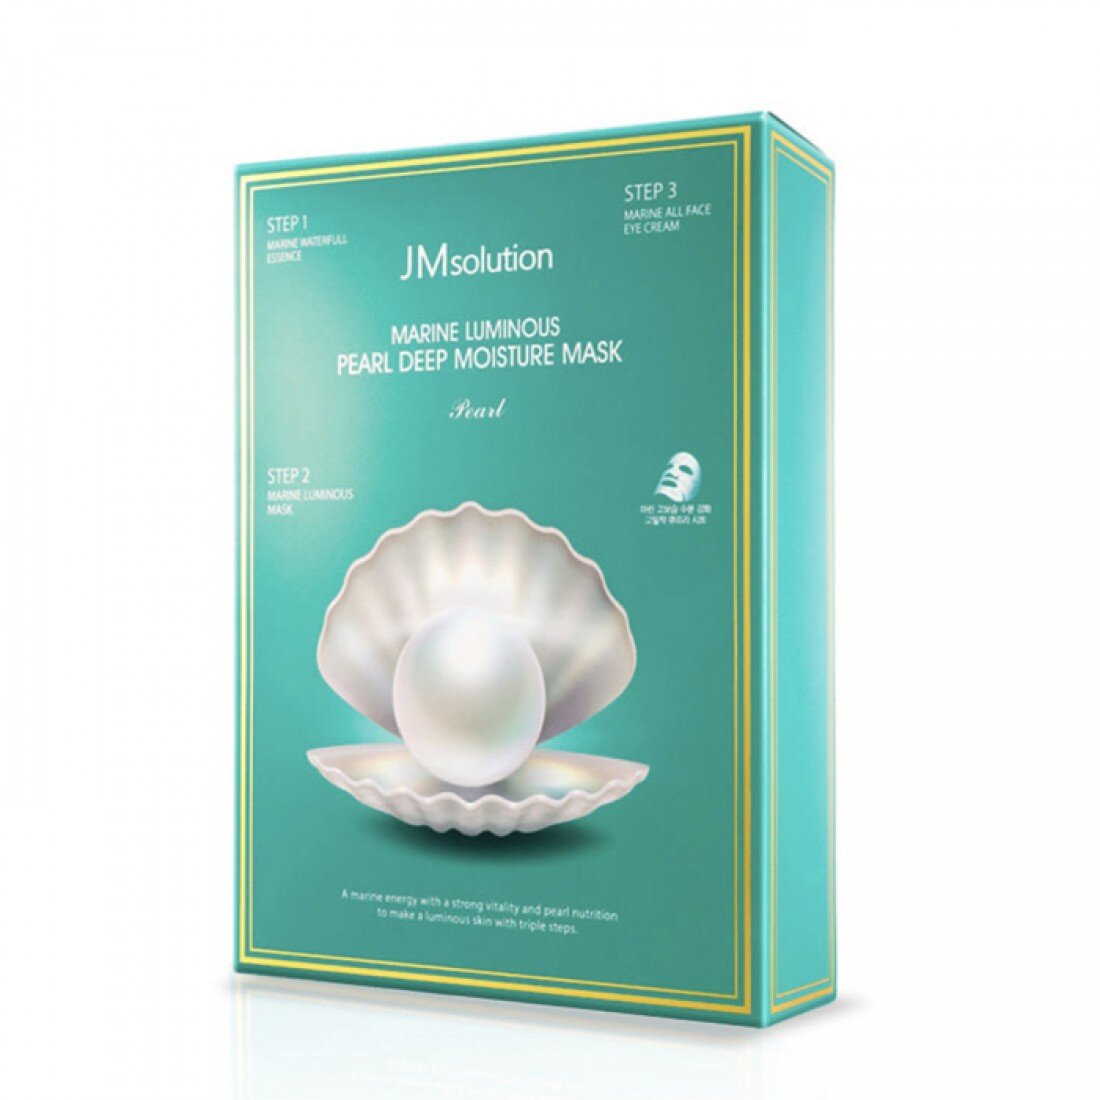 2 Boxes JM solution marine luminous pearl deep moisture mask 10 sheets (3 steps mask)